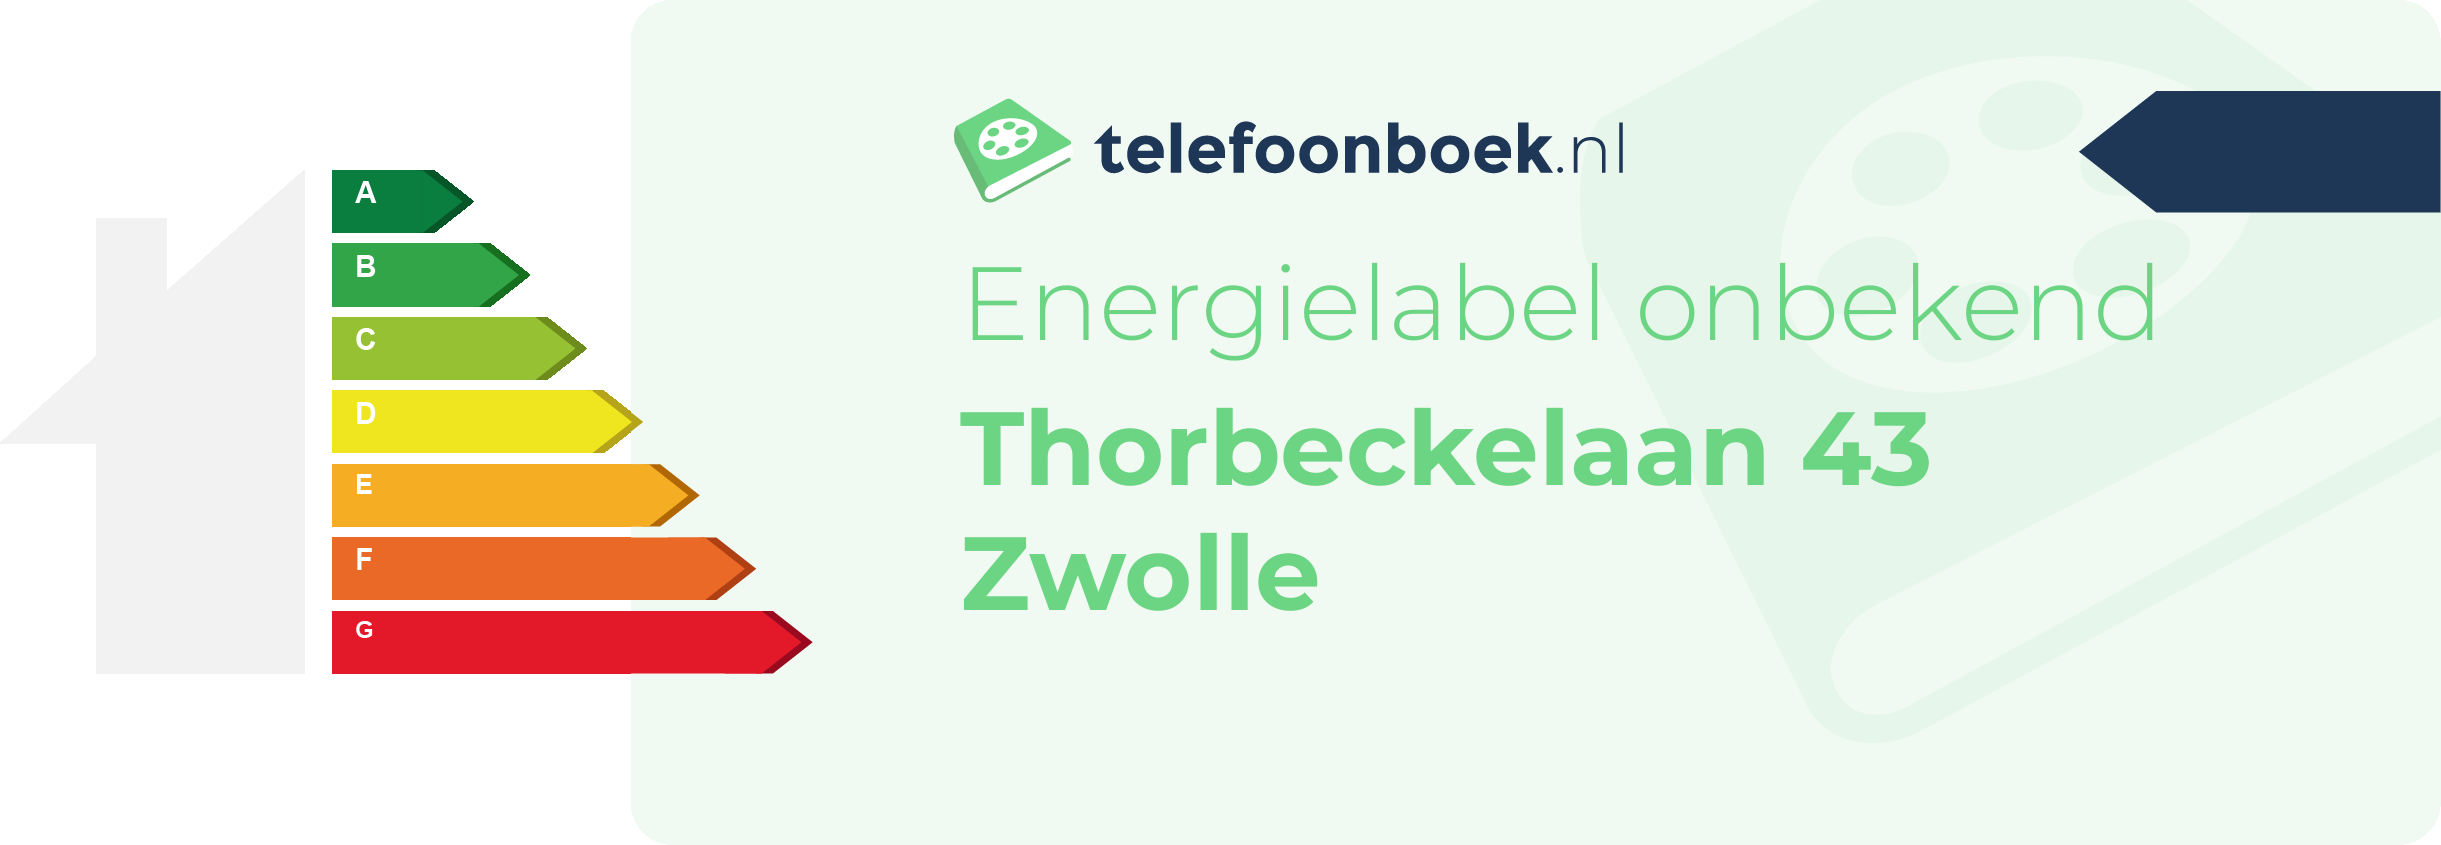 Energielabel Thorbeckelaan 43 Zwolle